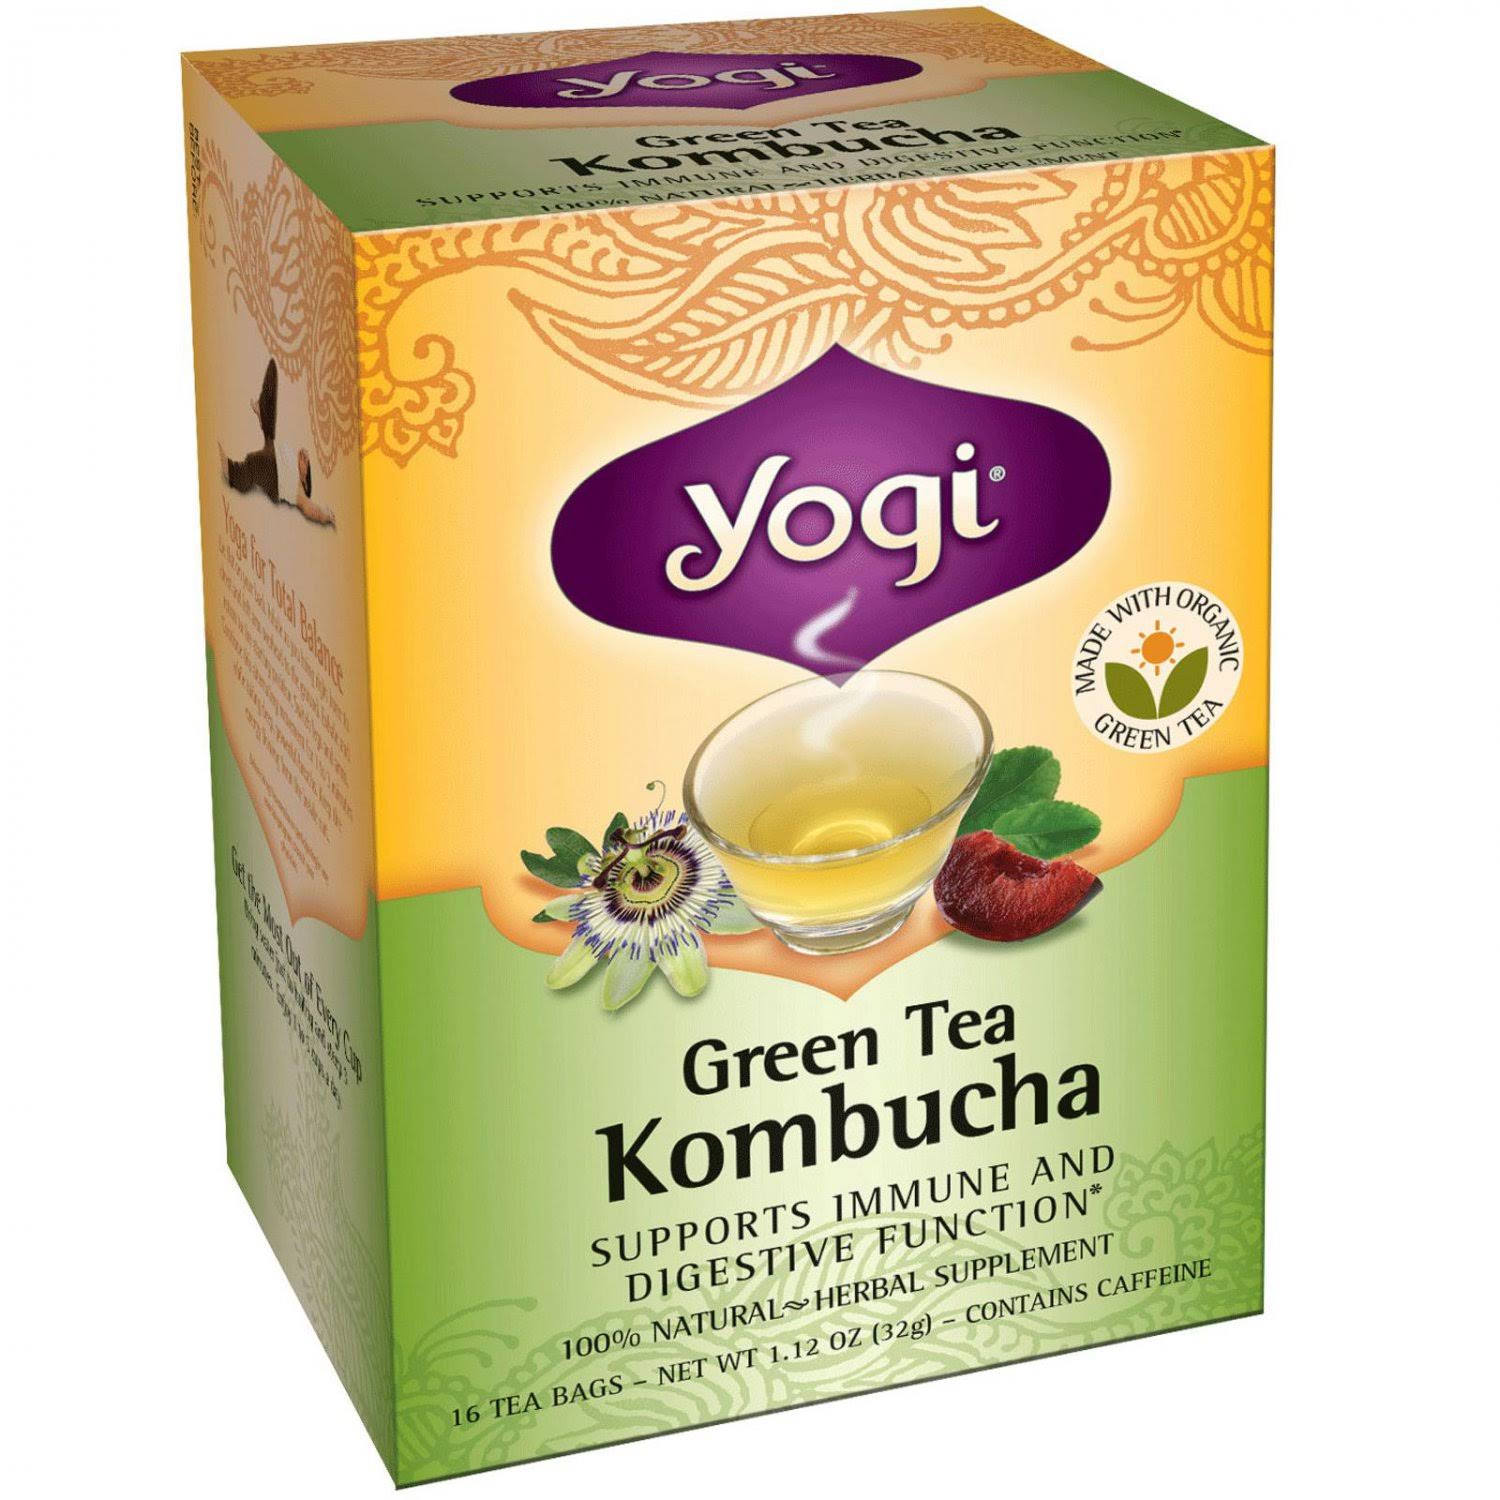 Yogi Green Tea - Kombucha, 16ct